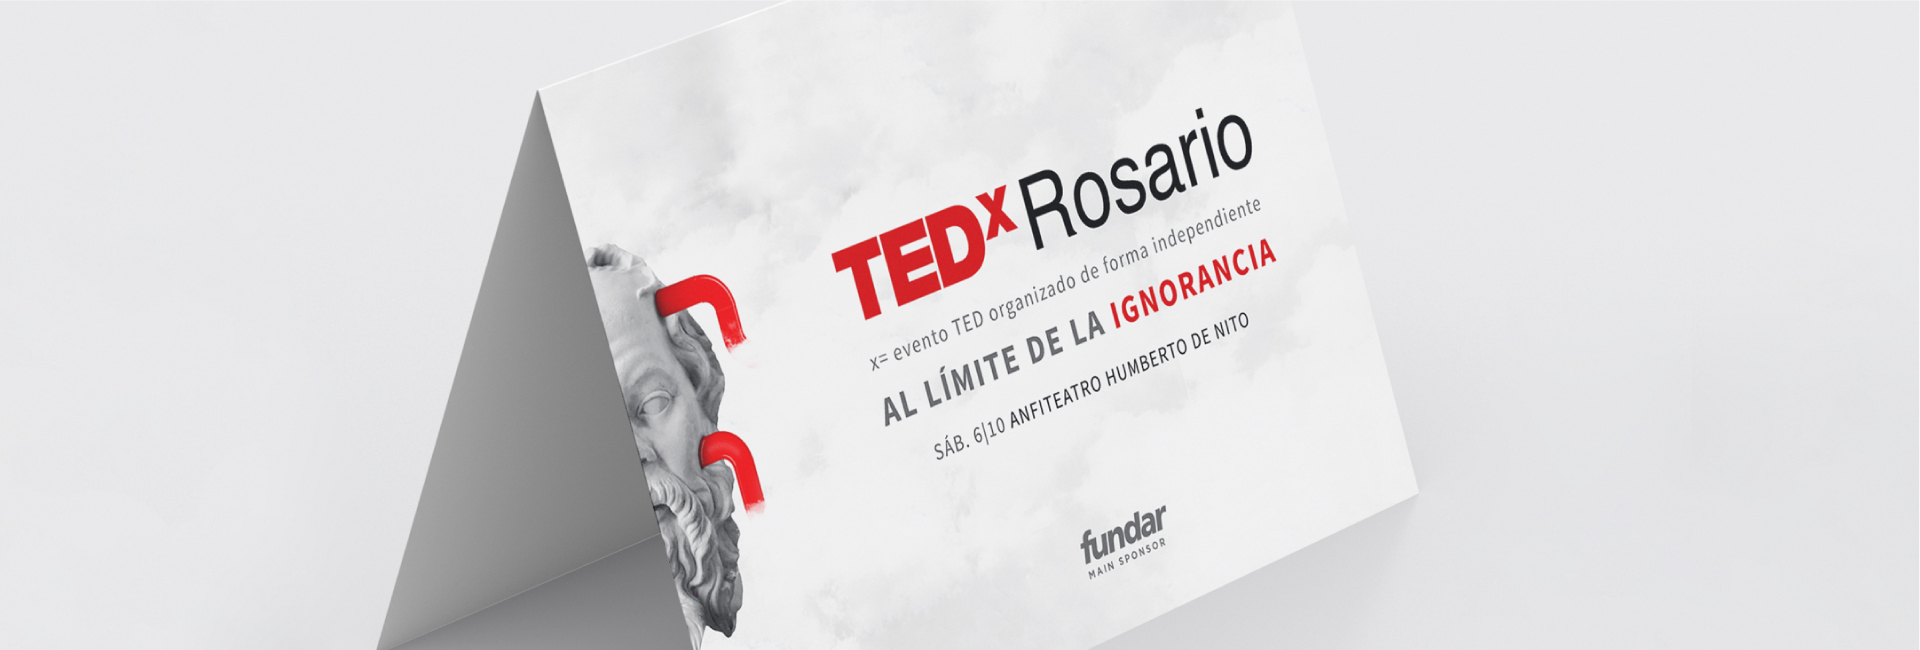 TEDx Rosario 2018